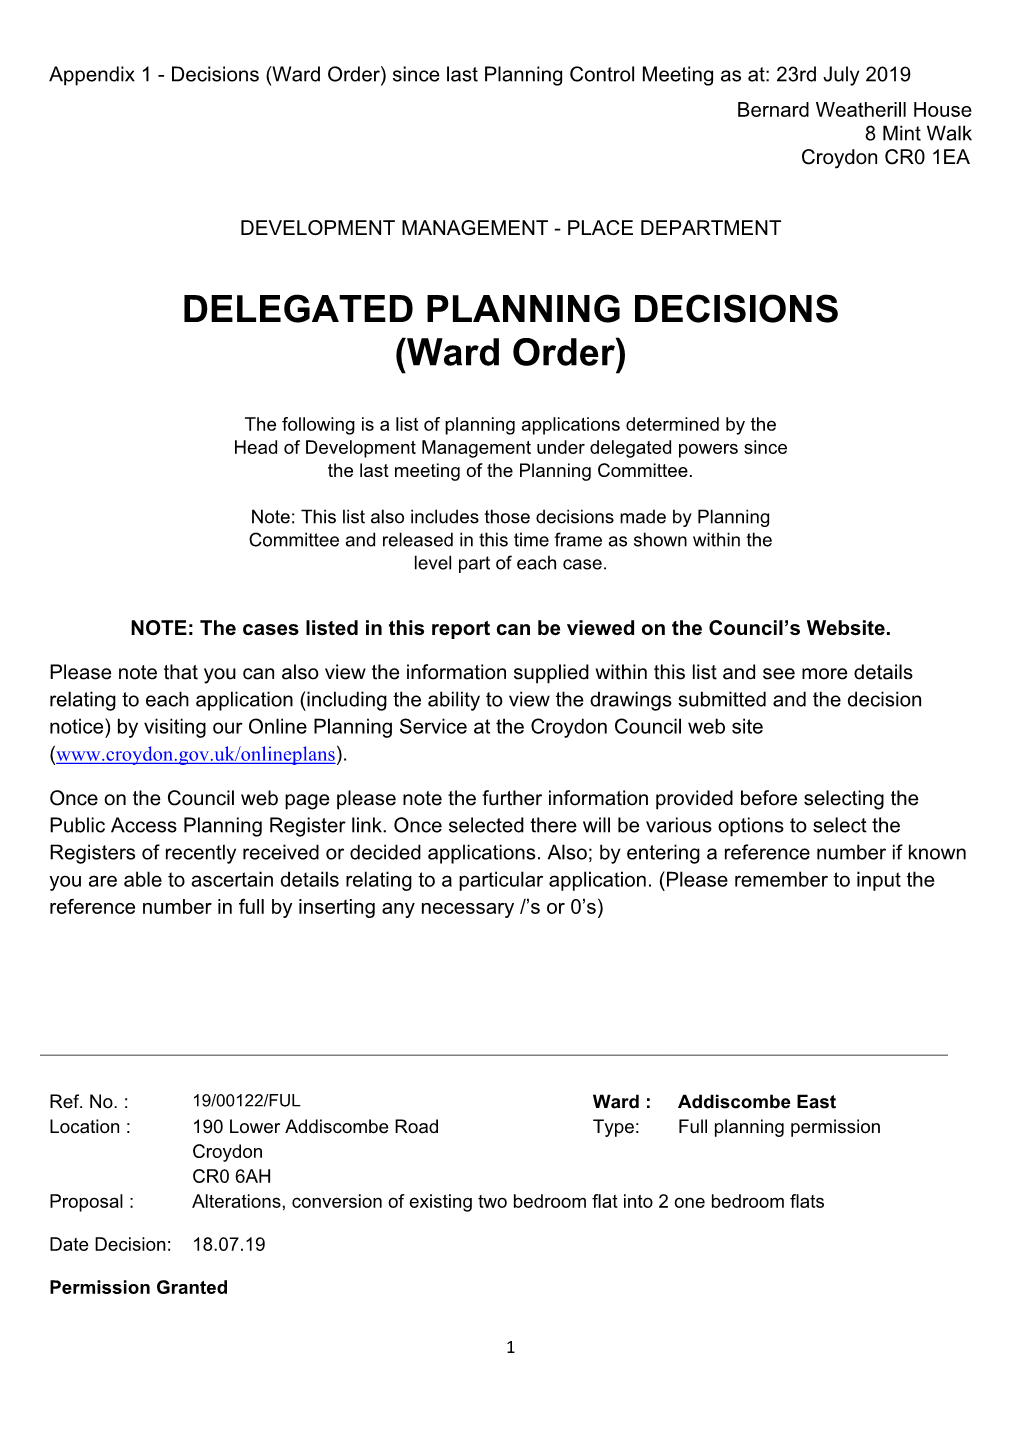 DELEGATED PLANNING DECISIONS (Ward Order)